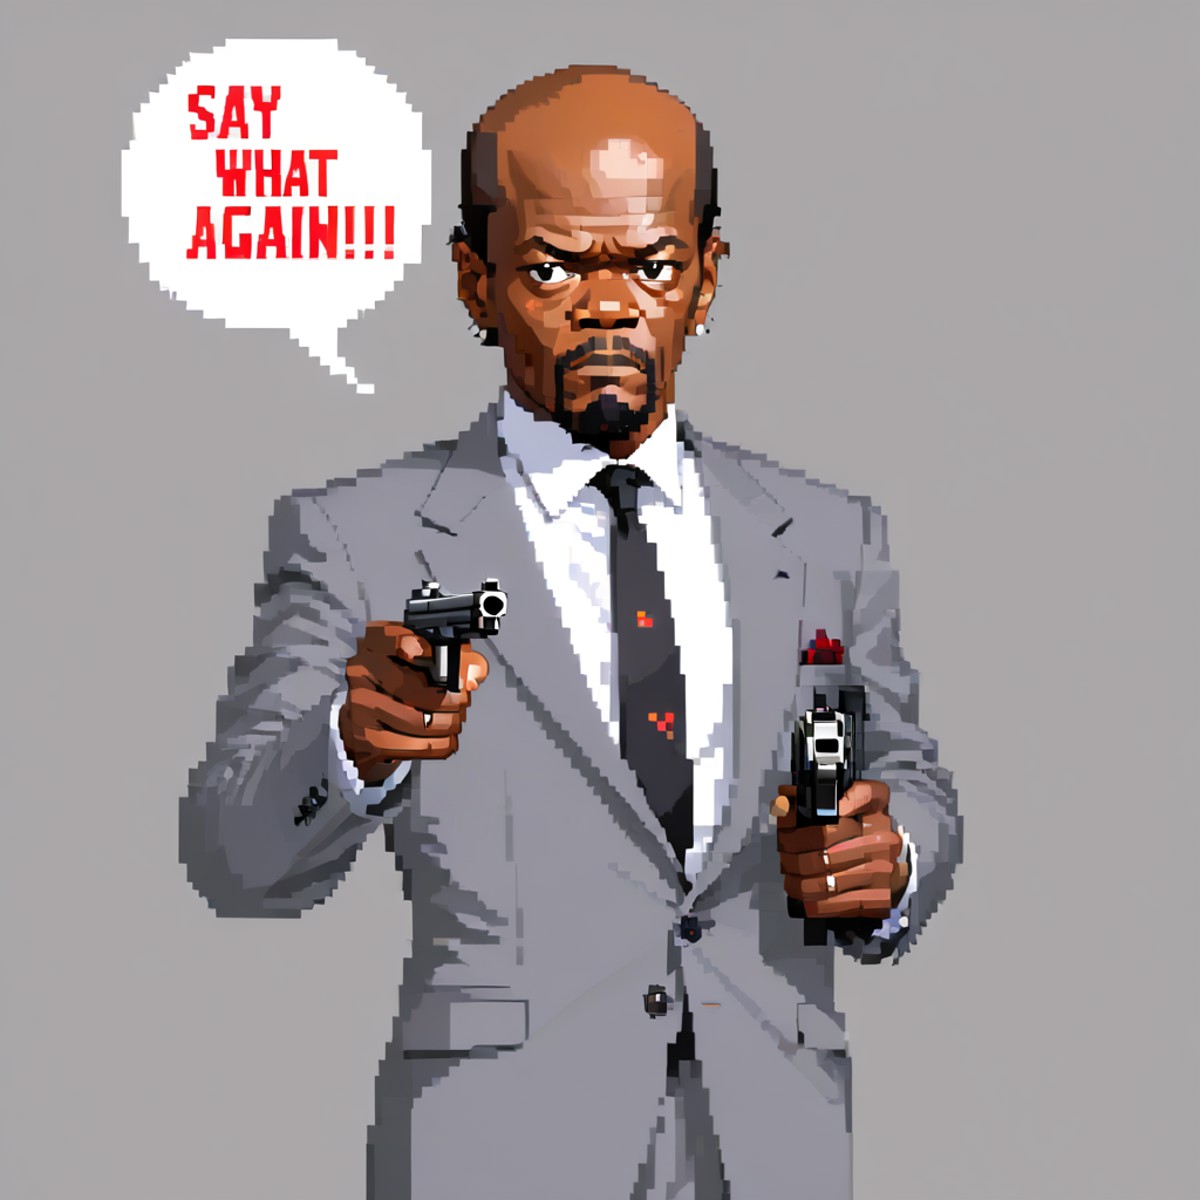 pixel art, samuel L Jackson text logo, speechbubble "Say What Again!" , holding a handgun, wearing a grey business suit,